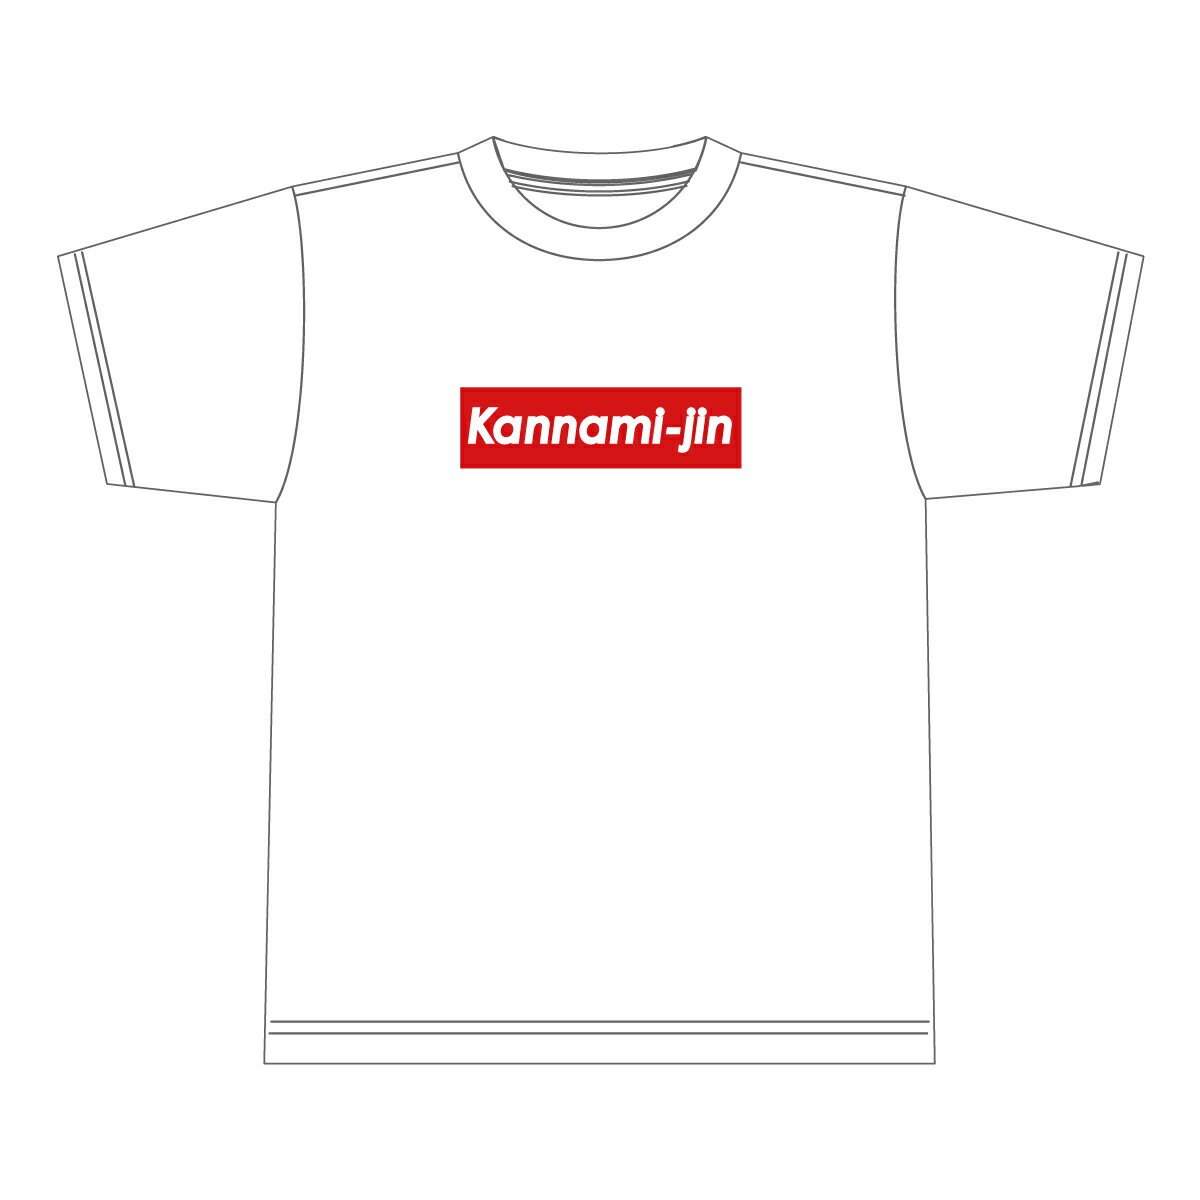 「Kannamii-jin【Tシャツ】（パクリーム） ホワイト」Tシャツ 白 ワンポイント ロゴ 函南 函南町 静岡 静岡県 ご当地 お土産 静岡人